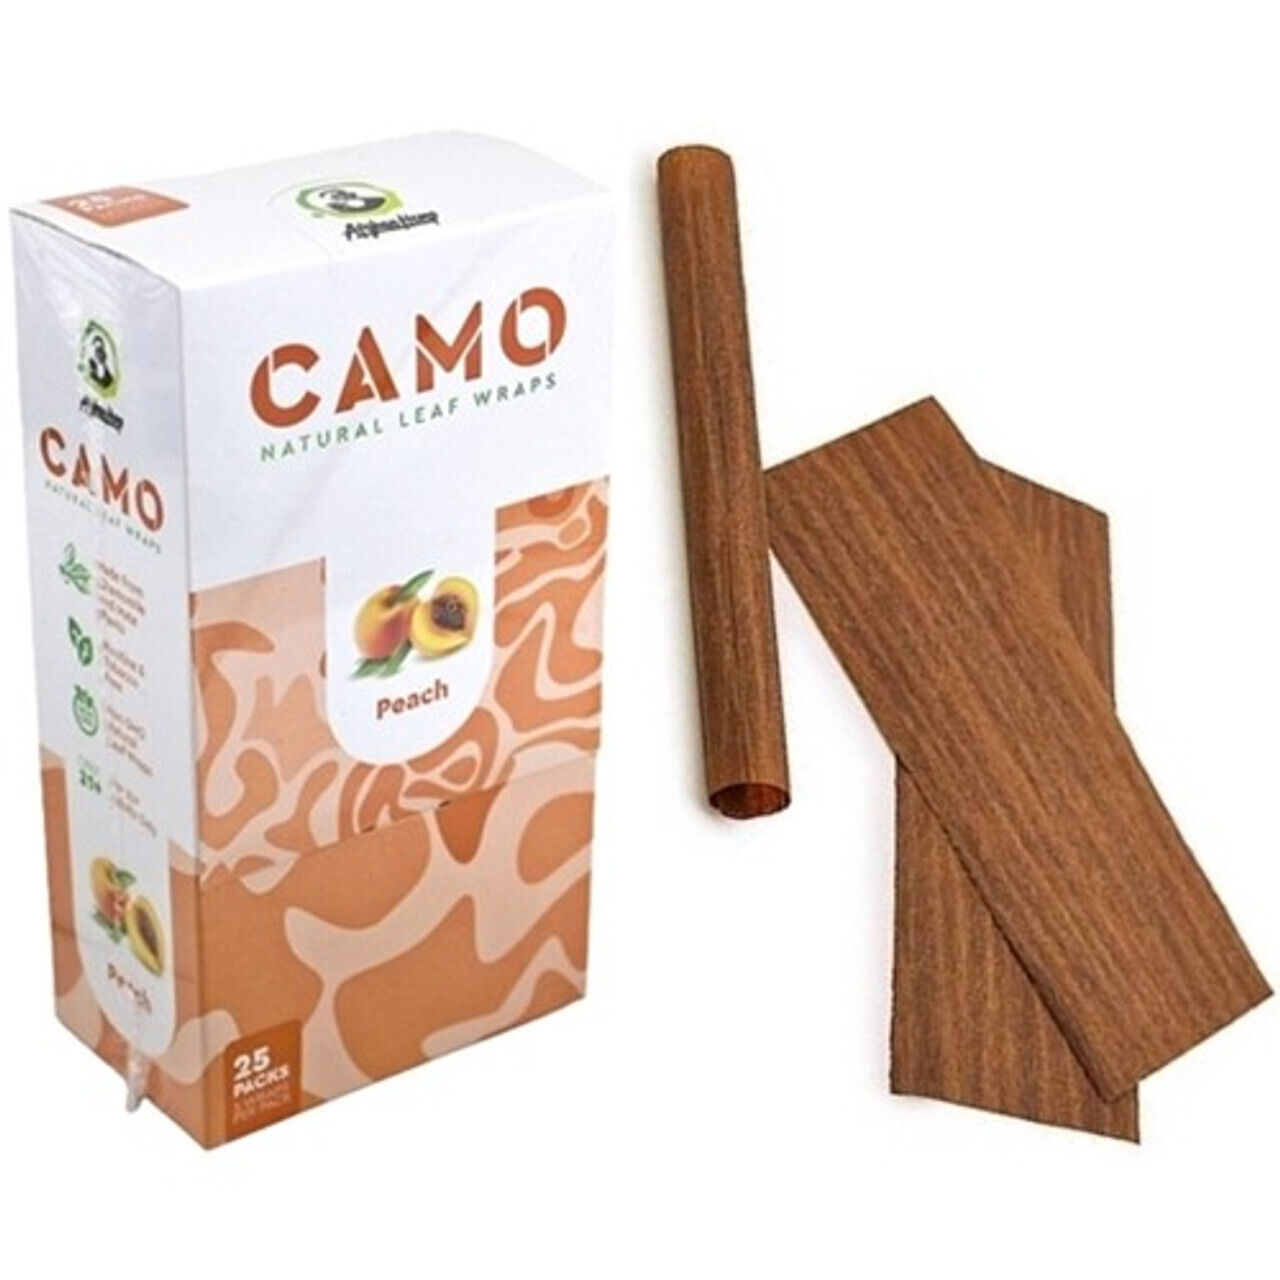 Camo Natural Leaf Wraps PEACH Self Rolling Herbal Wraps 25 Packs, Full Box